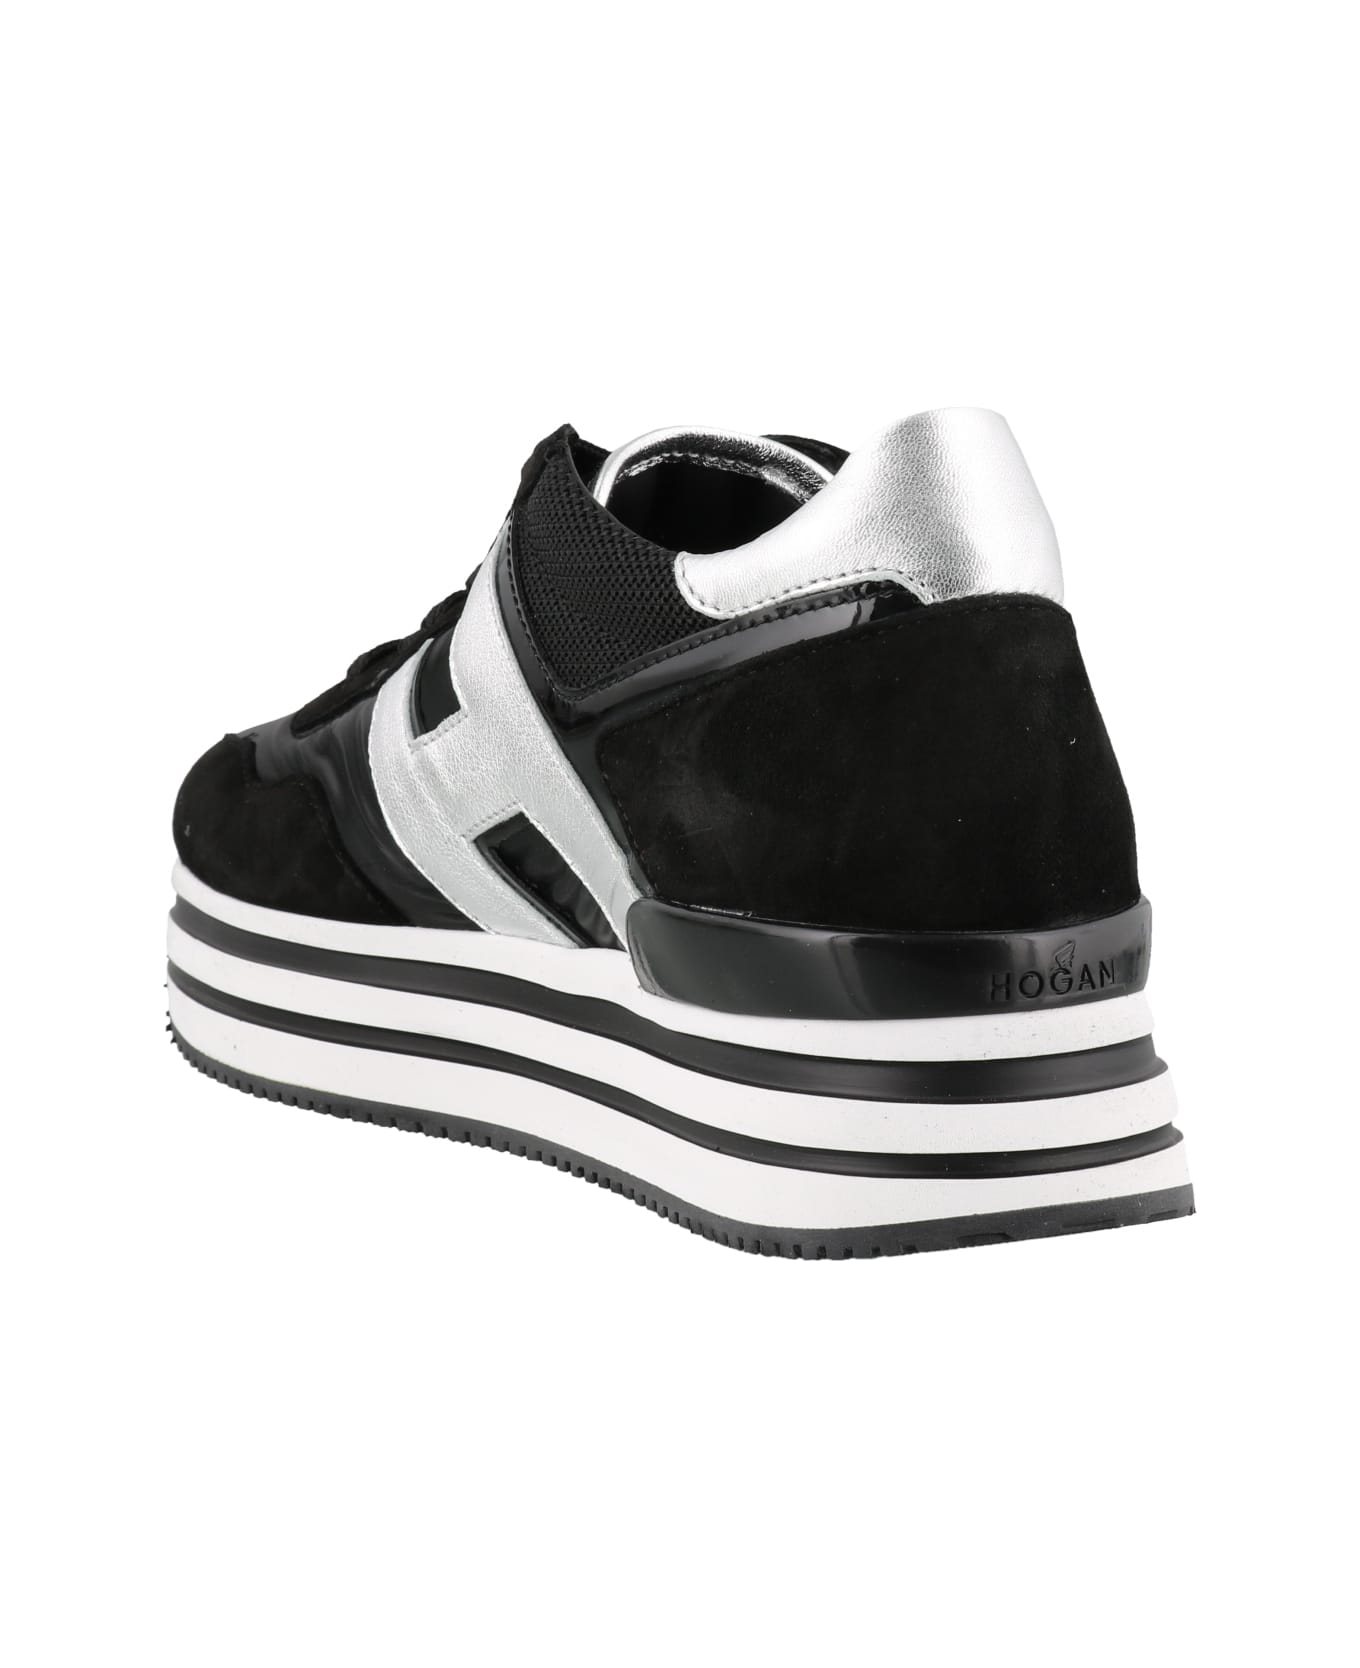 Hogan H483 Sneakers | italist